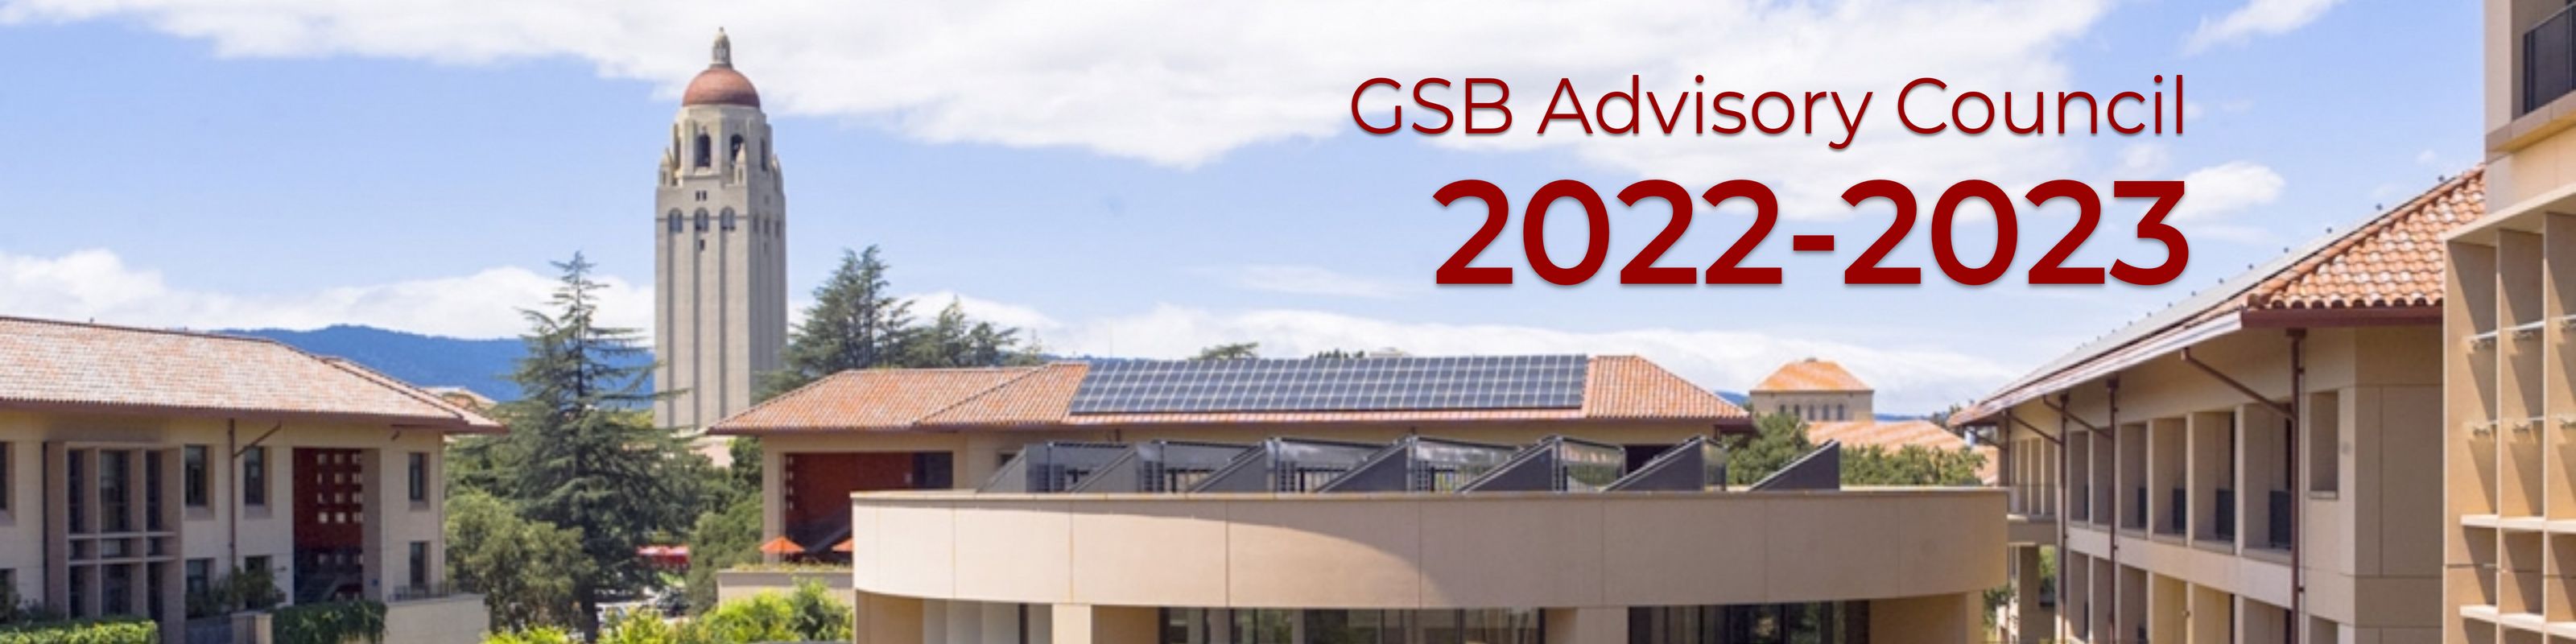 Stanford GSB Advisory Council